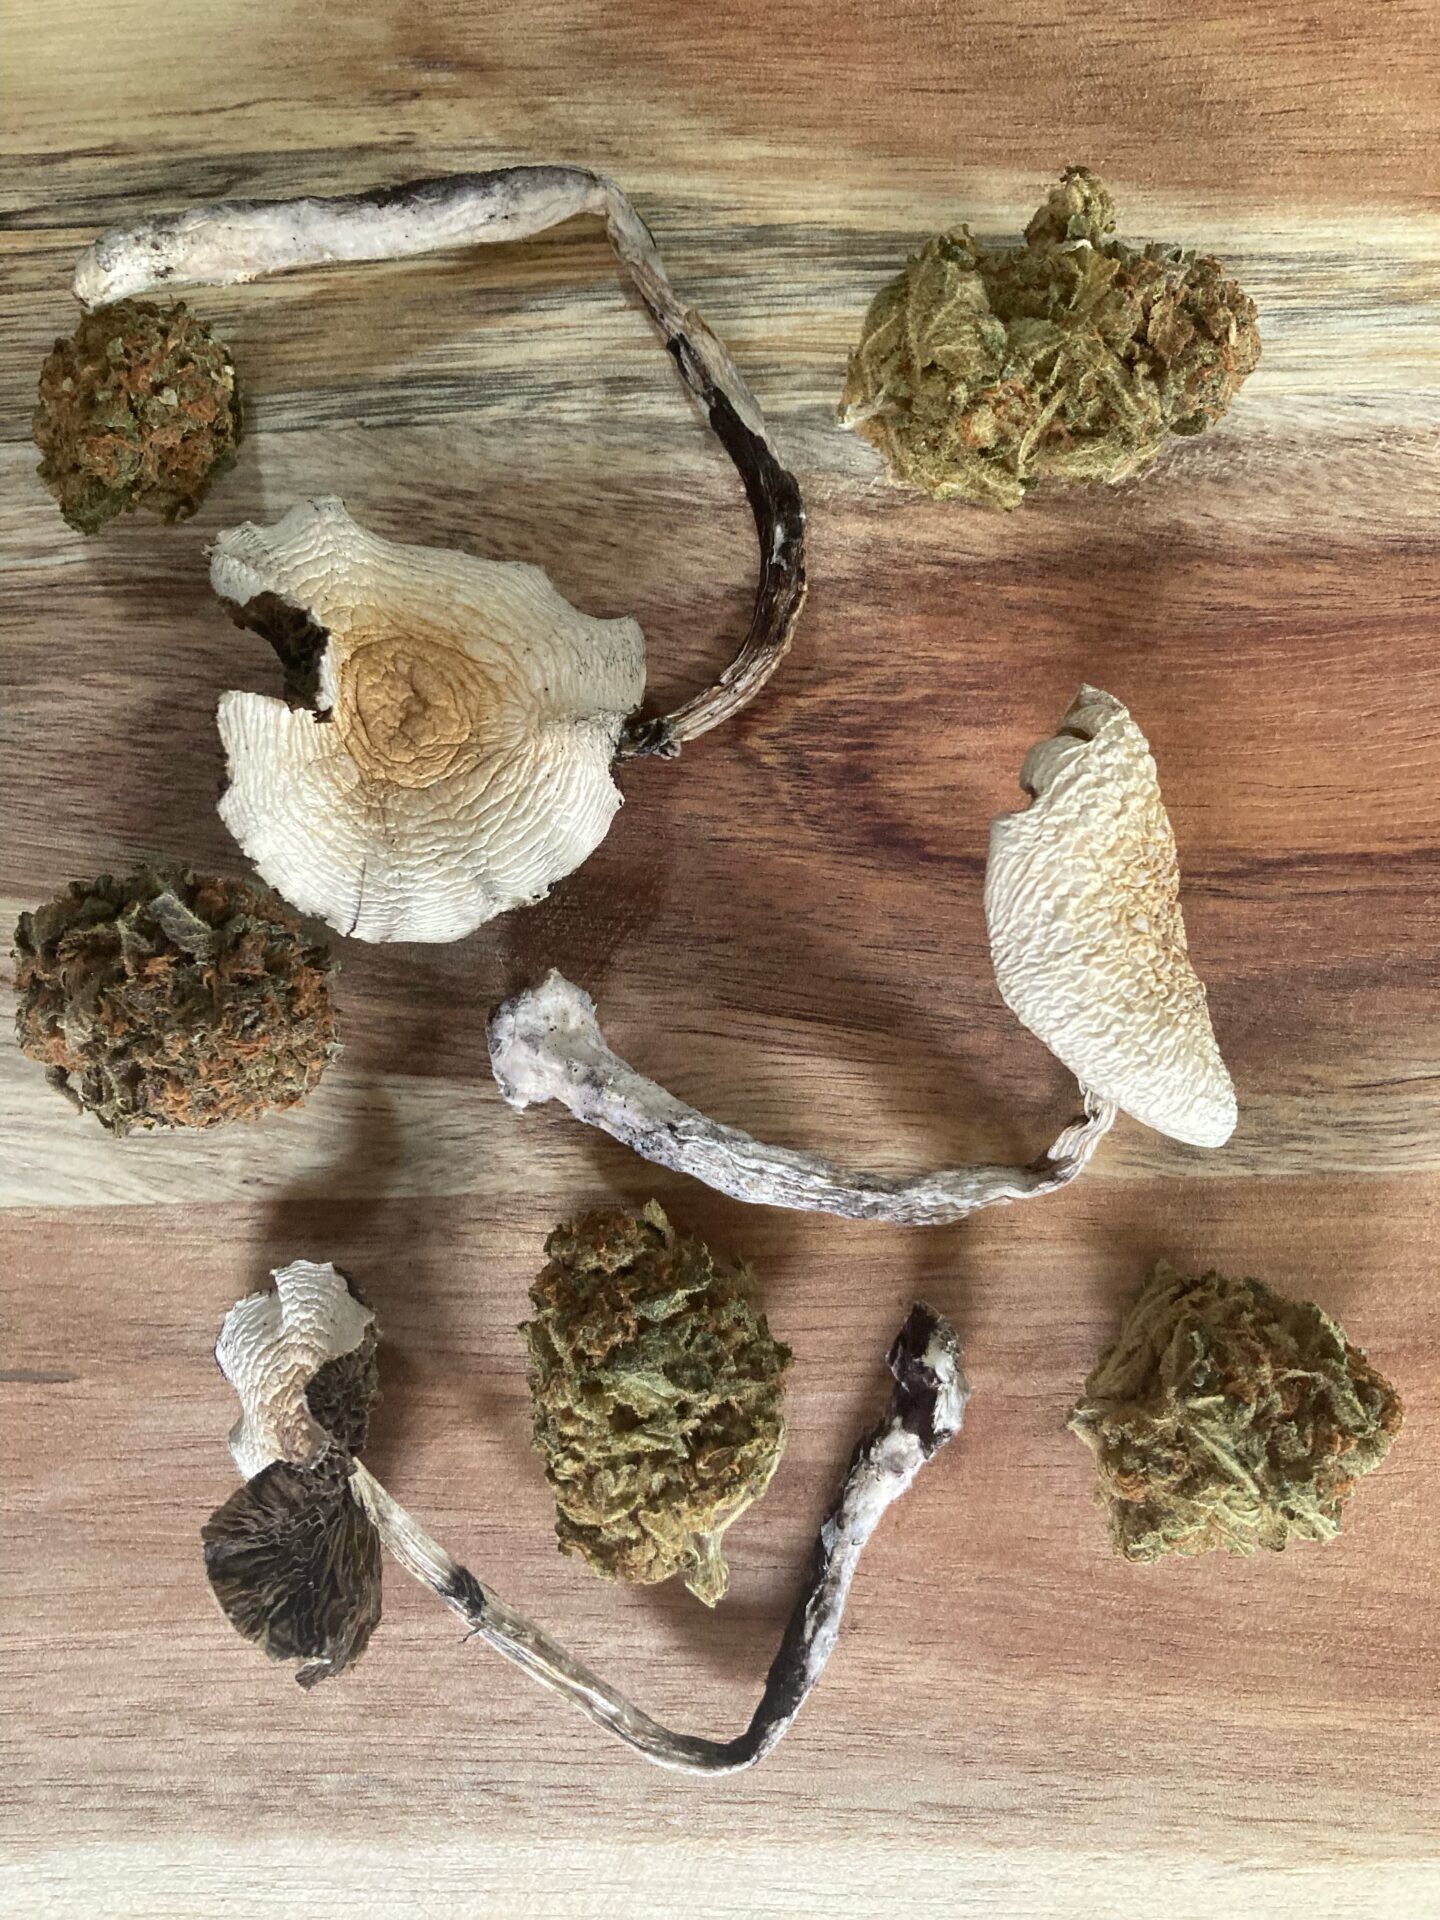 Magic Mushrooms and Cannabis